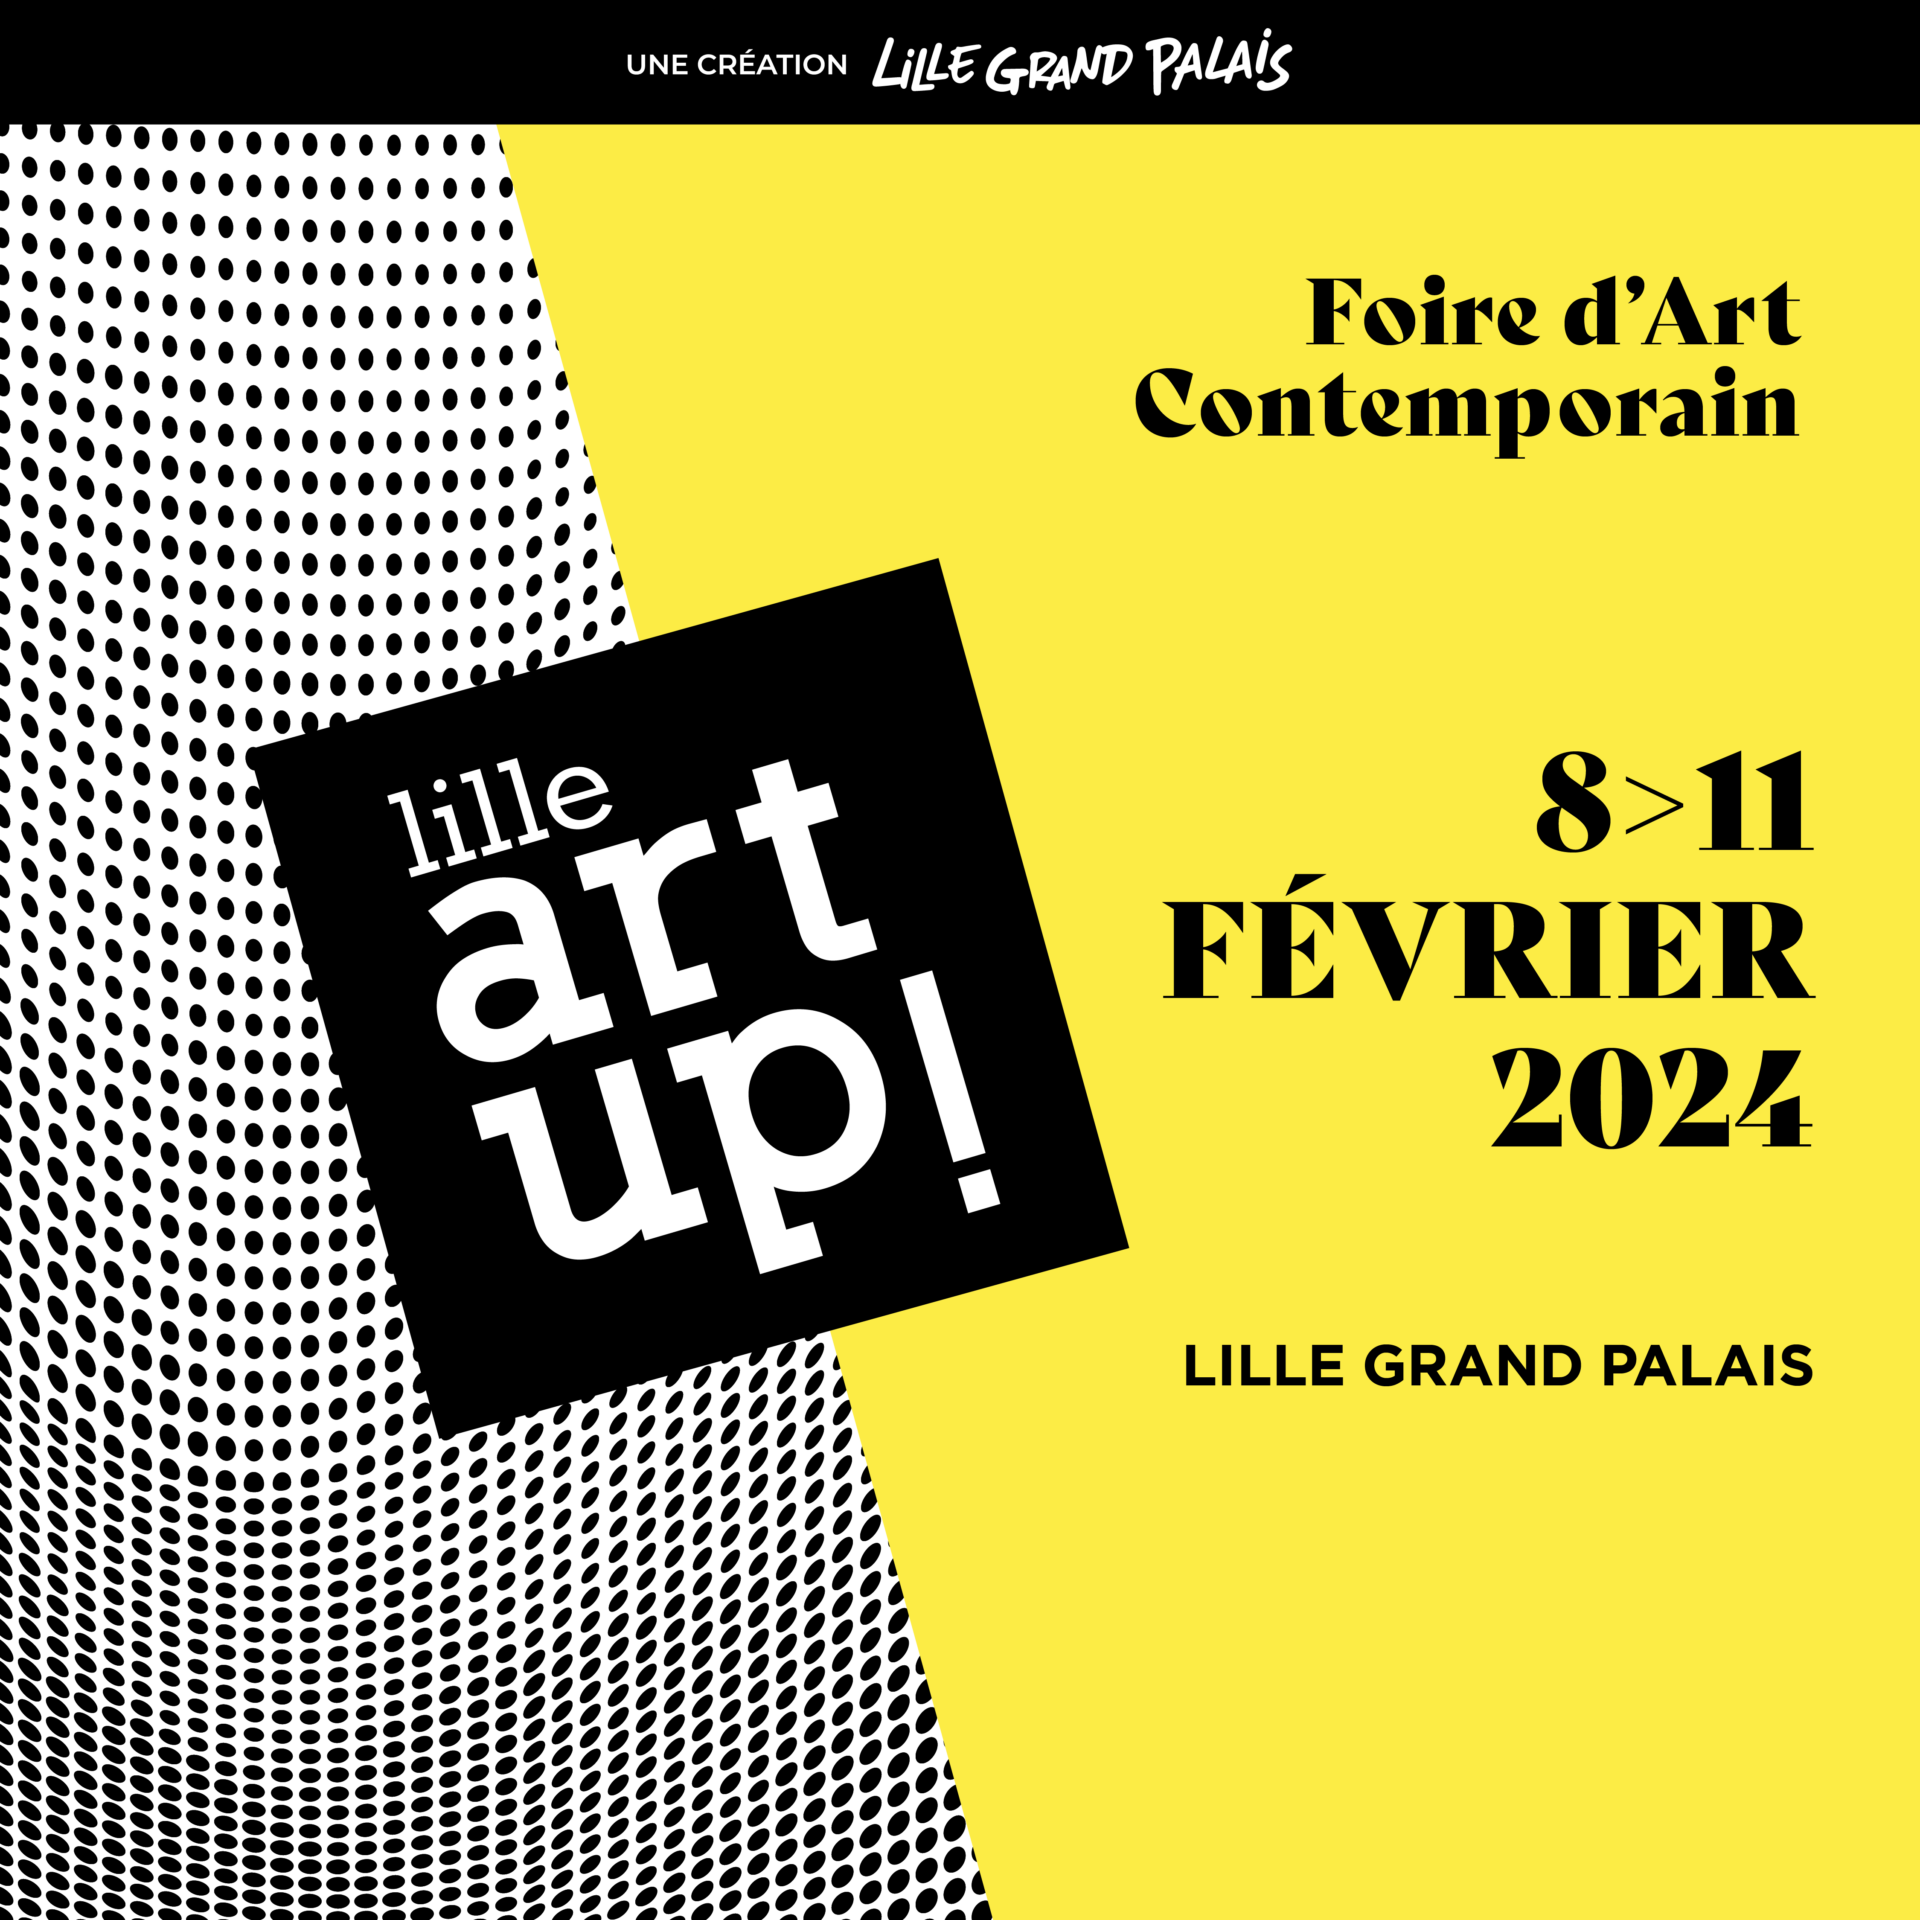 Lille Art Up! 2024